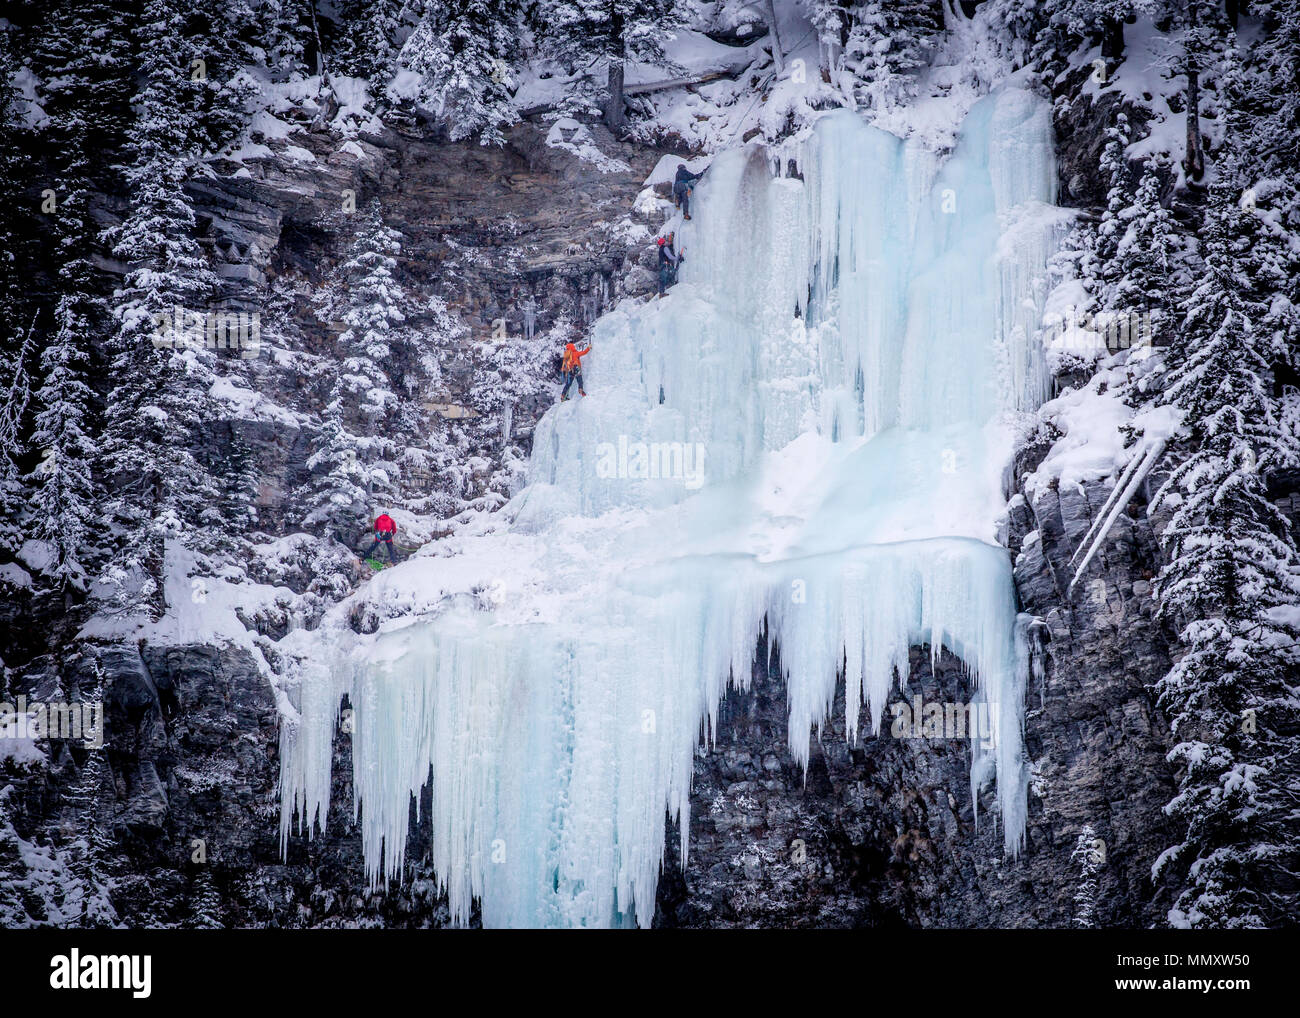 climbers climbing on a frozen waterfall Stock Photo